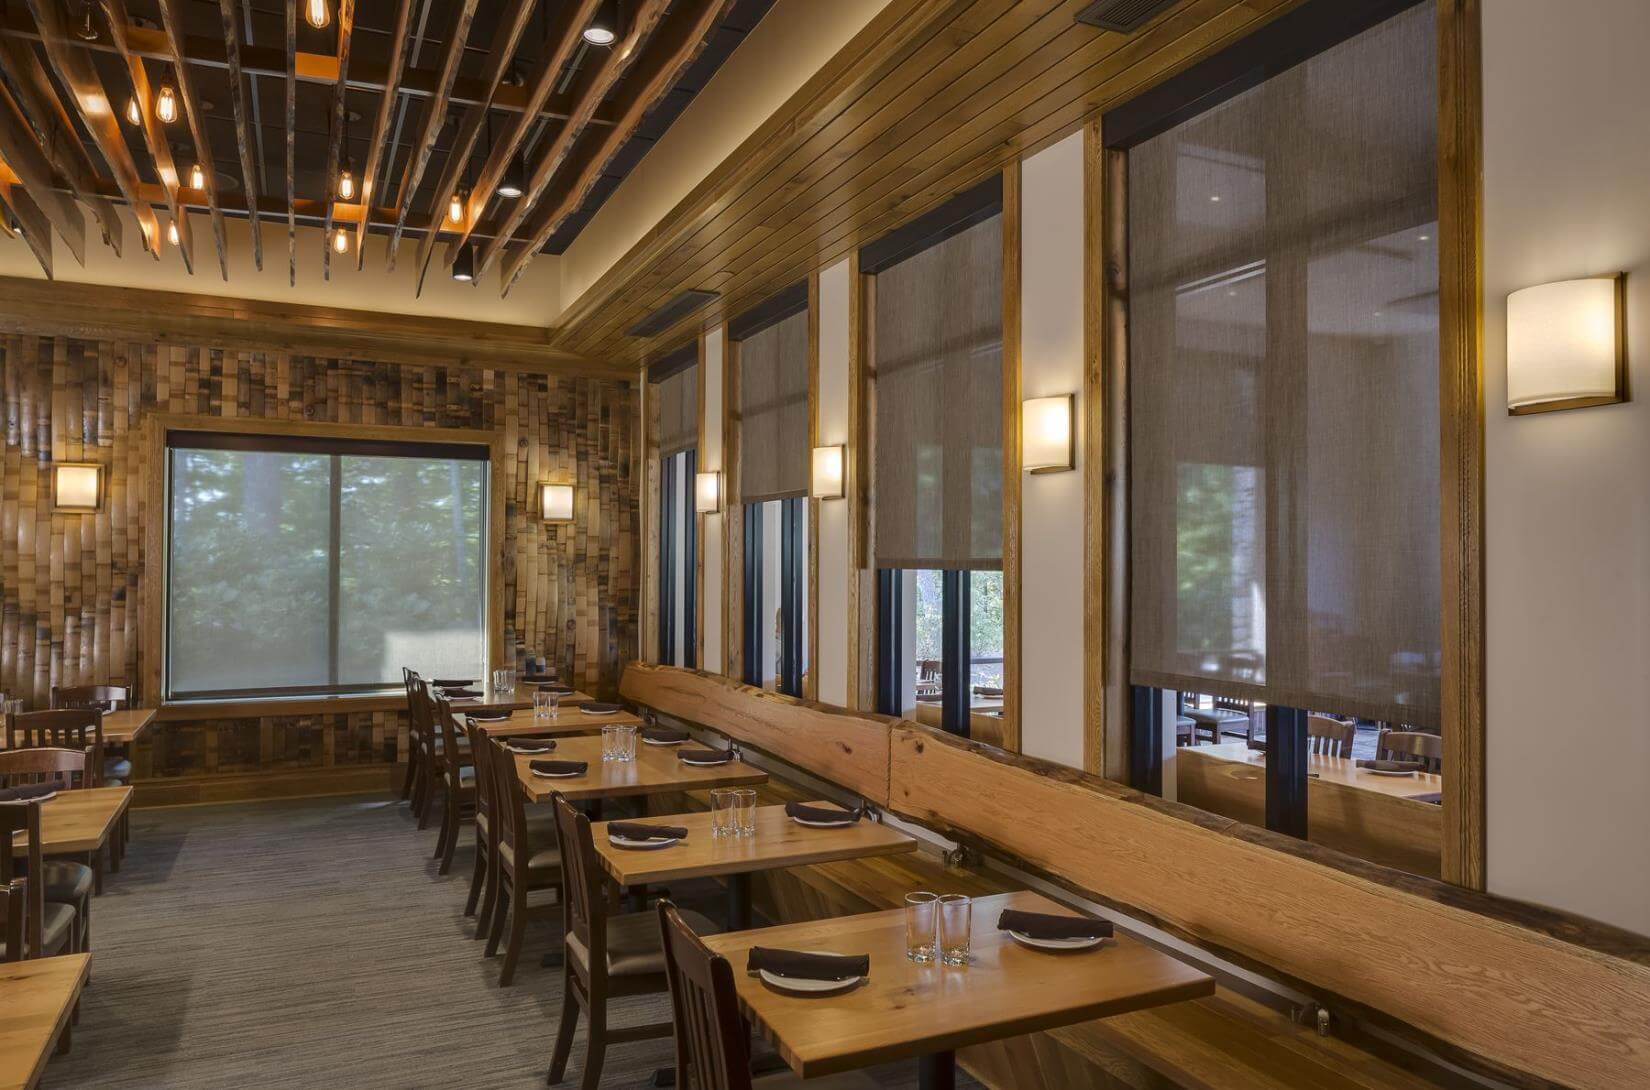 Interior Restaurant with Large Windows